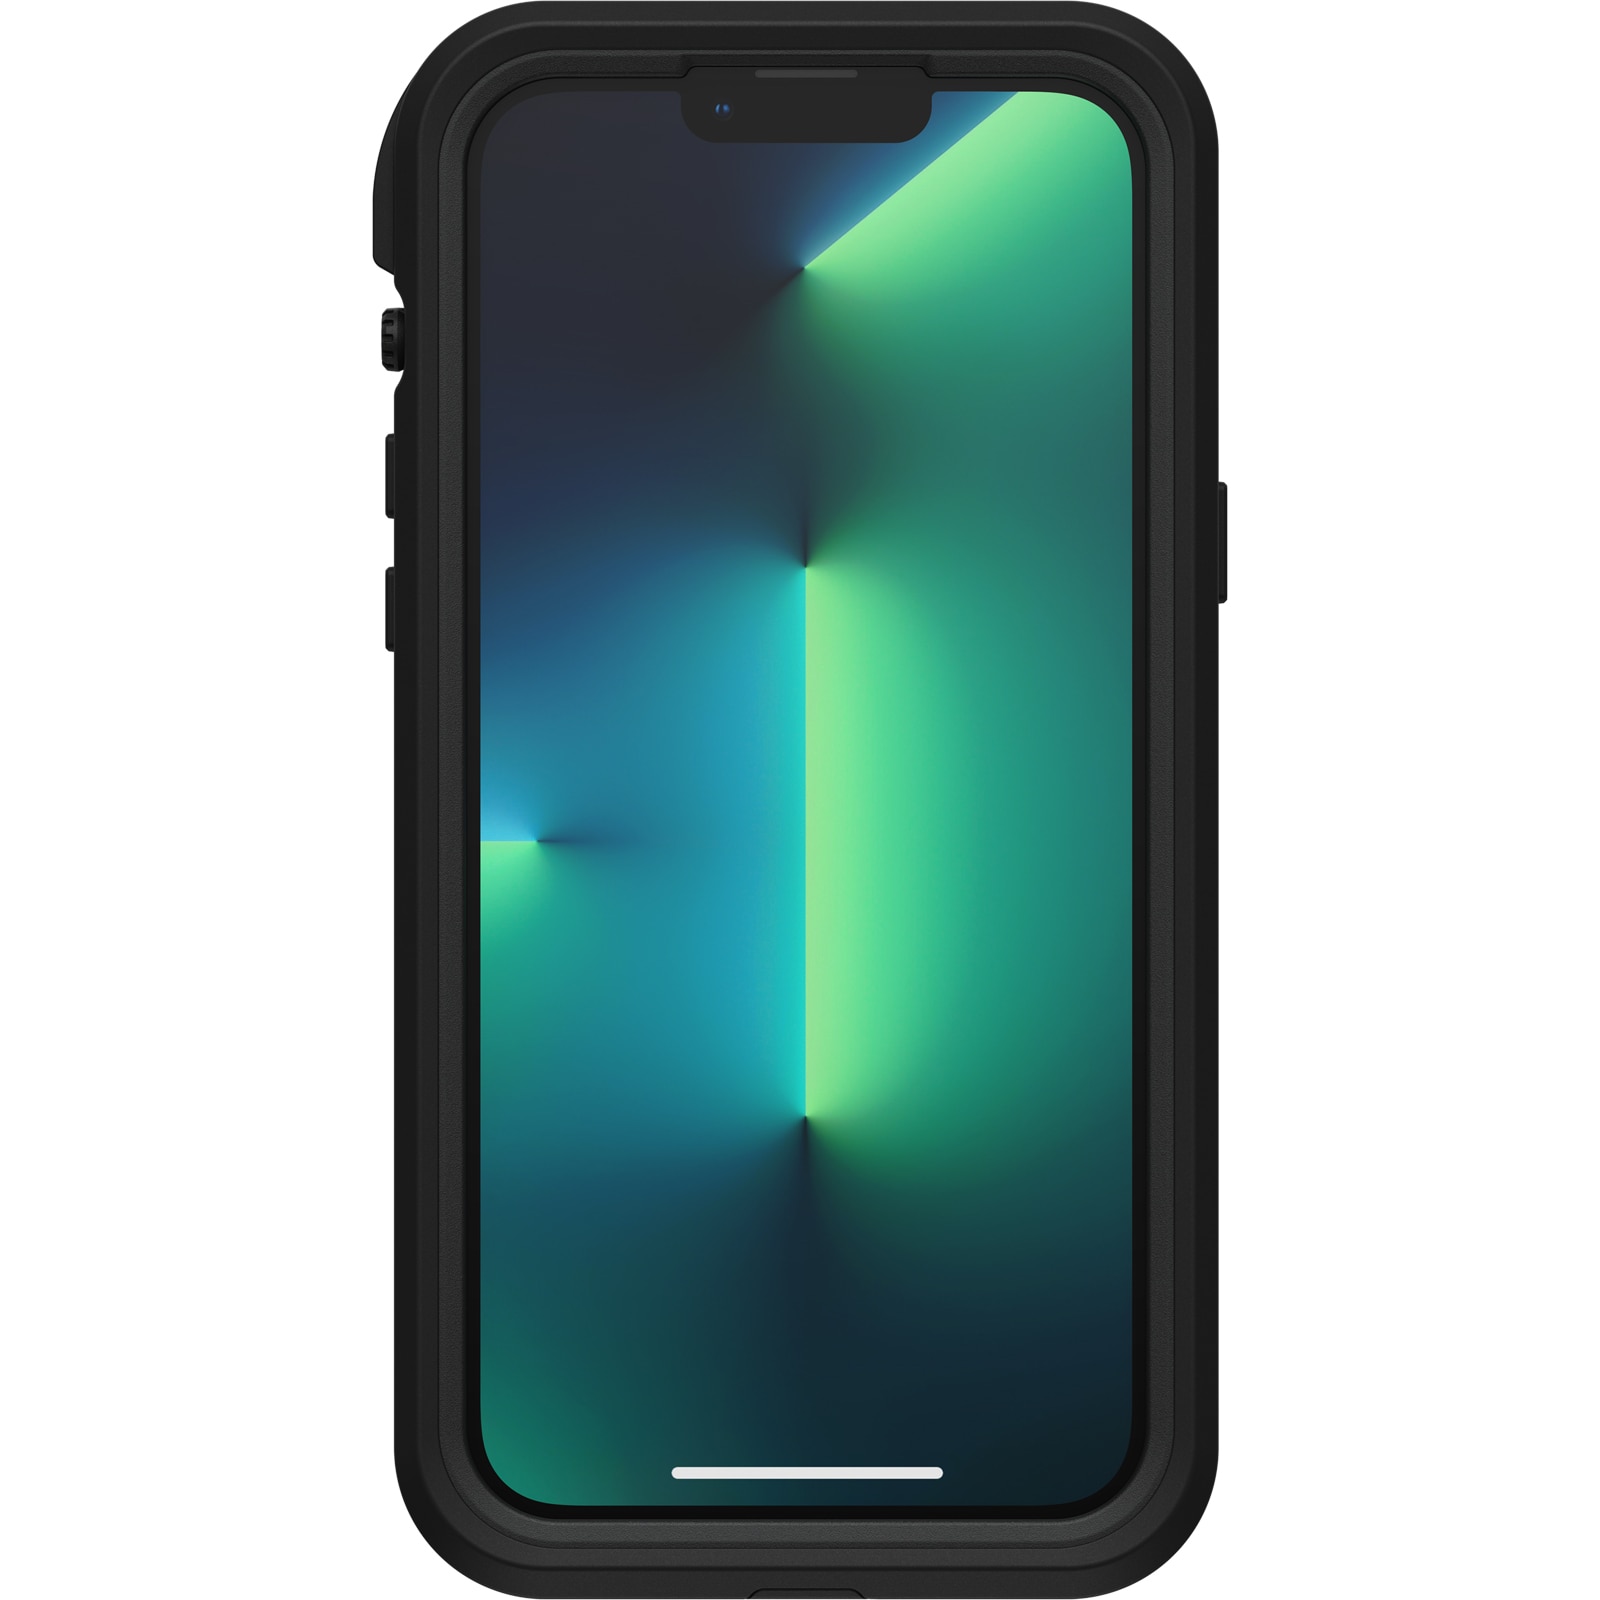 FRE Case iPhone 13 Pro Max Black